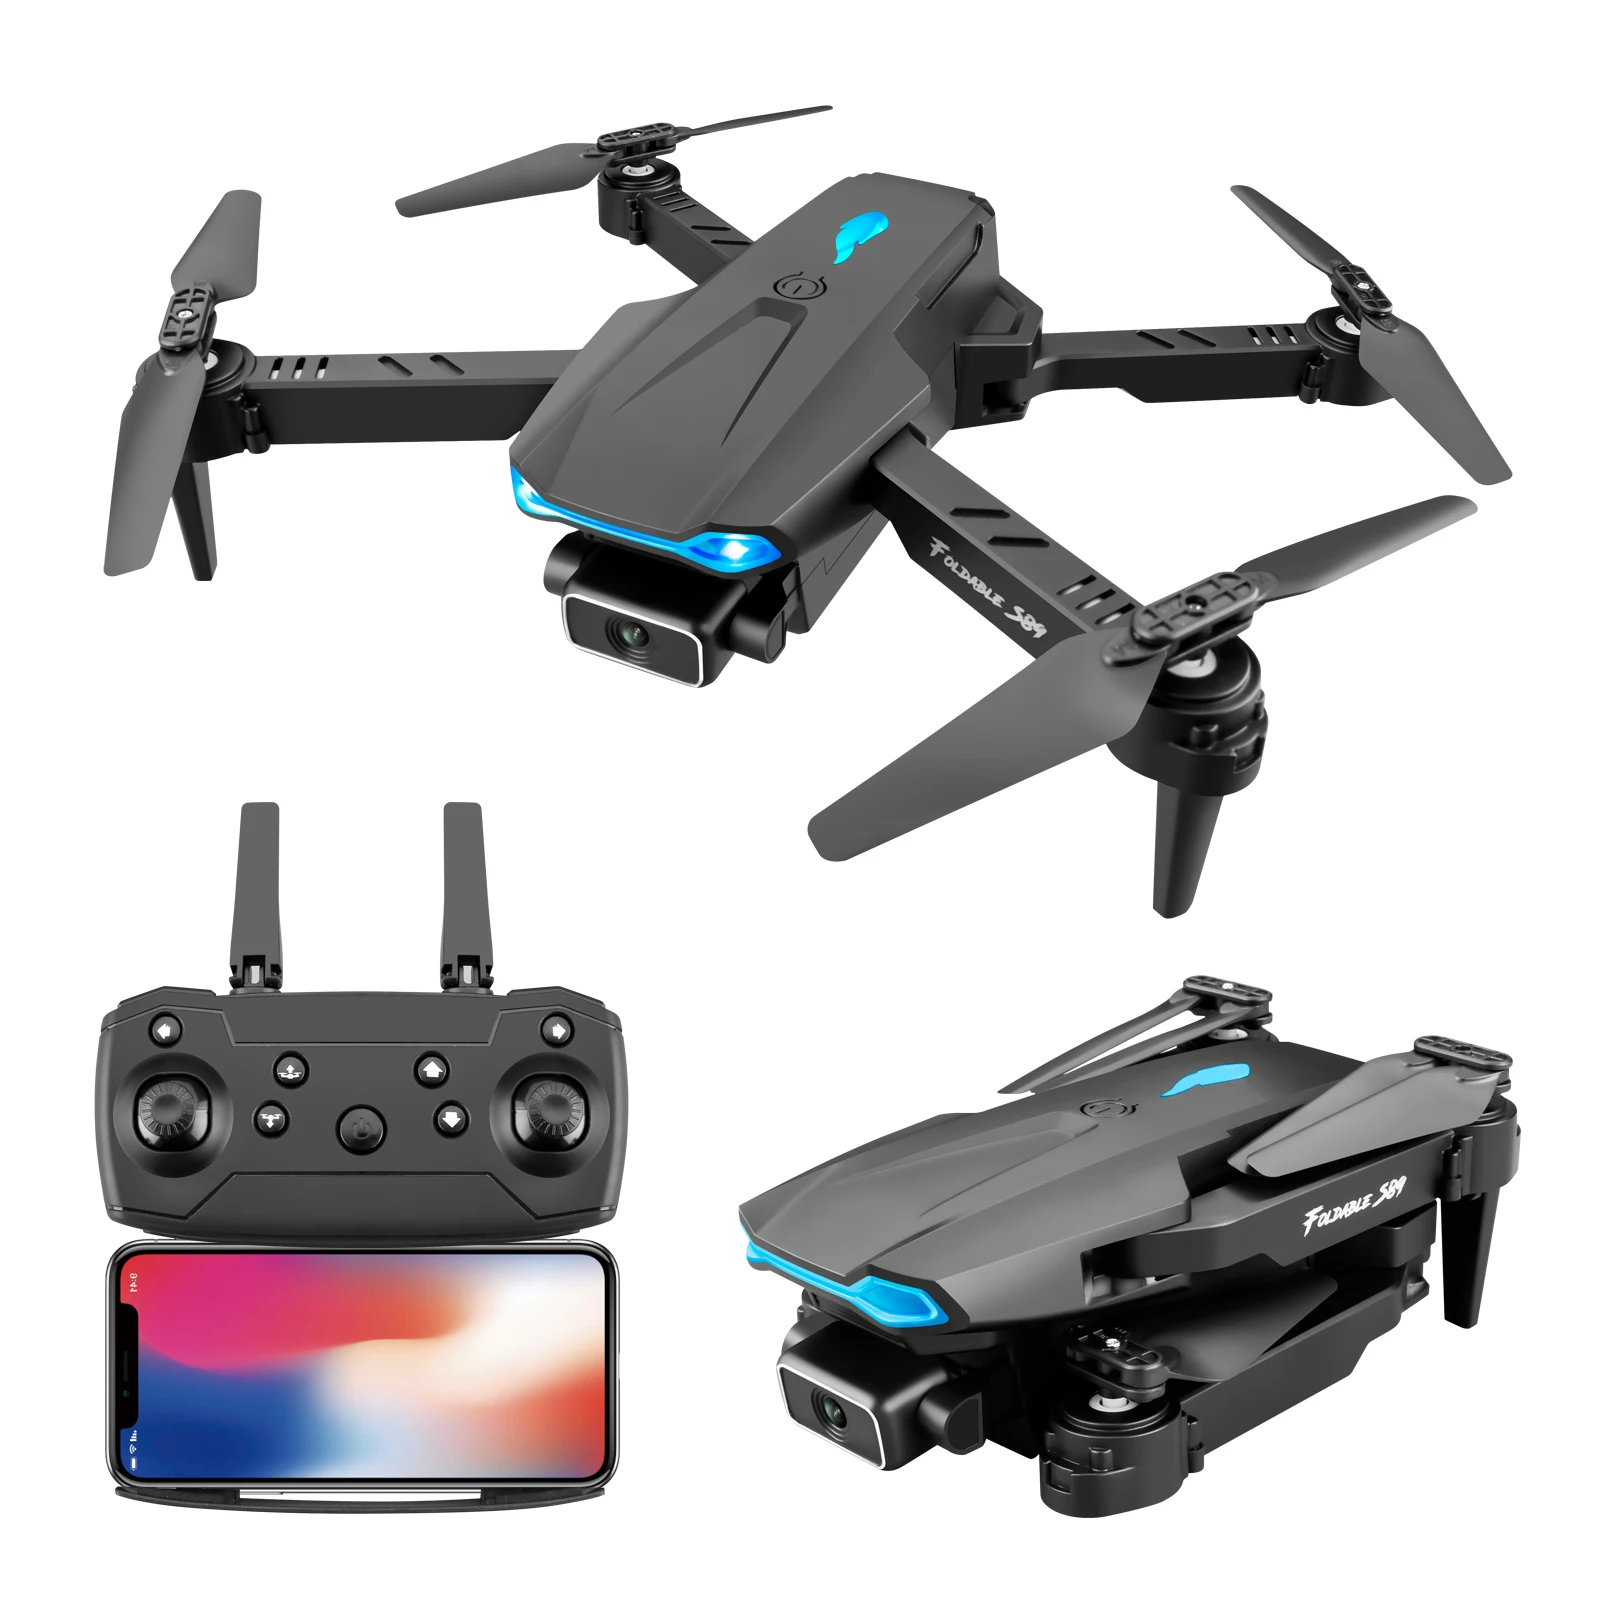 

New Mini Drone 4K 1080P HD Camera WiFi Fpv Air Pressure Altitude Hold Black And Gray Foldable Quadcopter RC Dron Toy